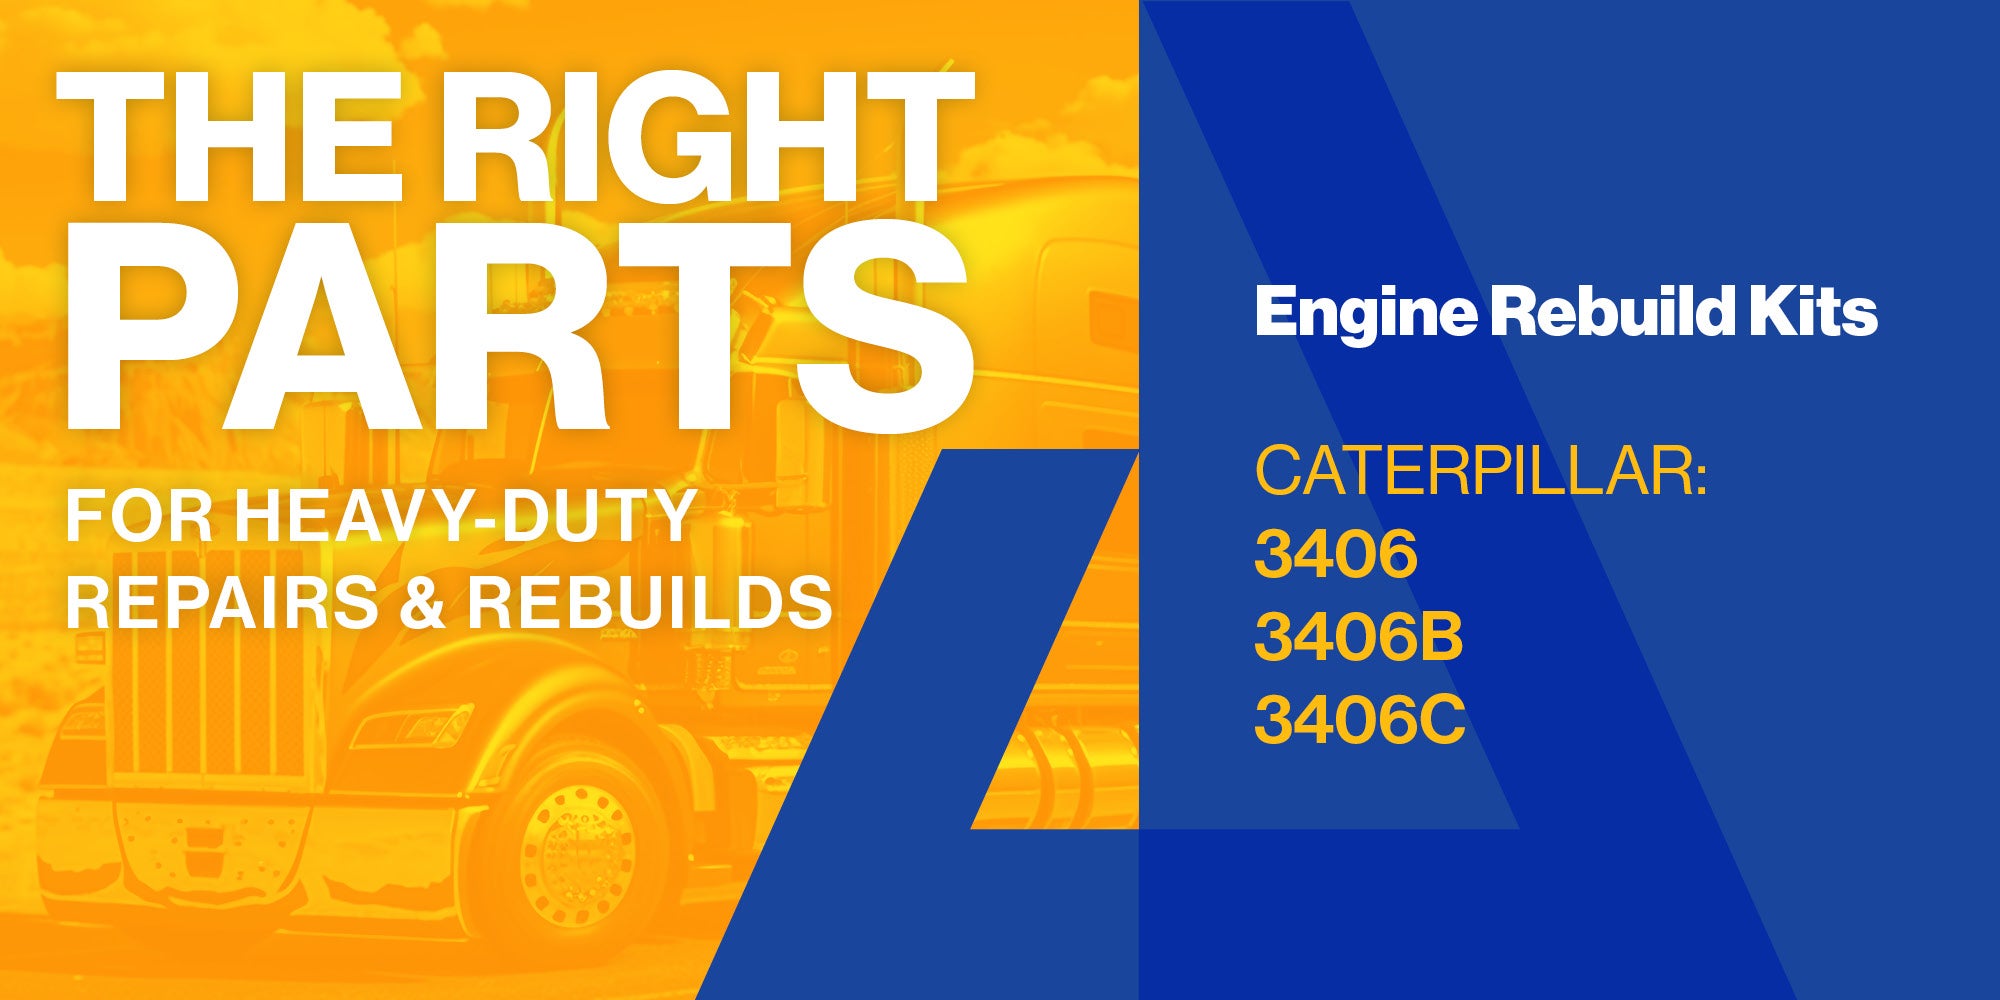 Catepillar Engine Rebuild Kits